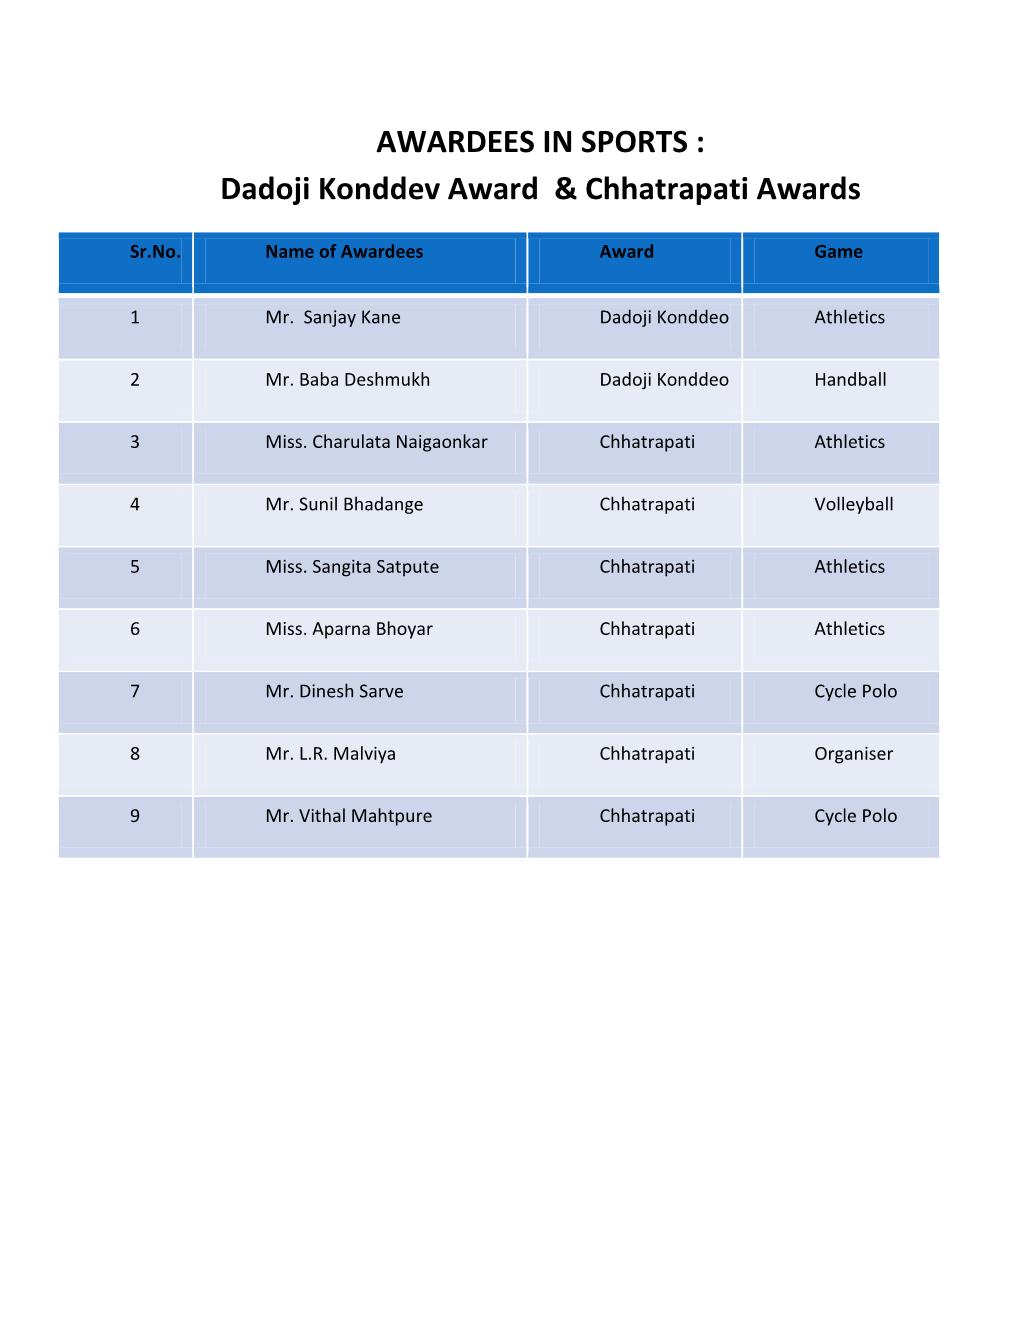 AWARDEES in SPORTS : Dadoji Konddev Award & Chhatrapati